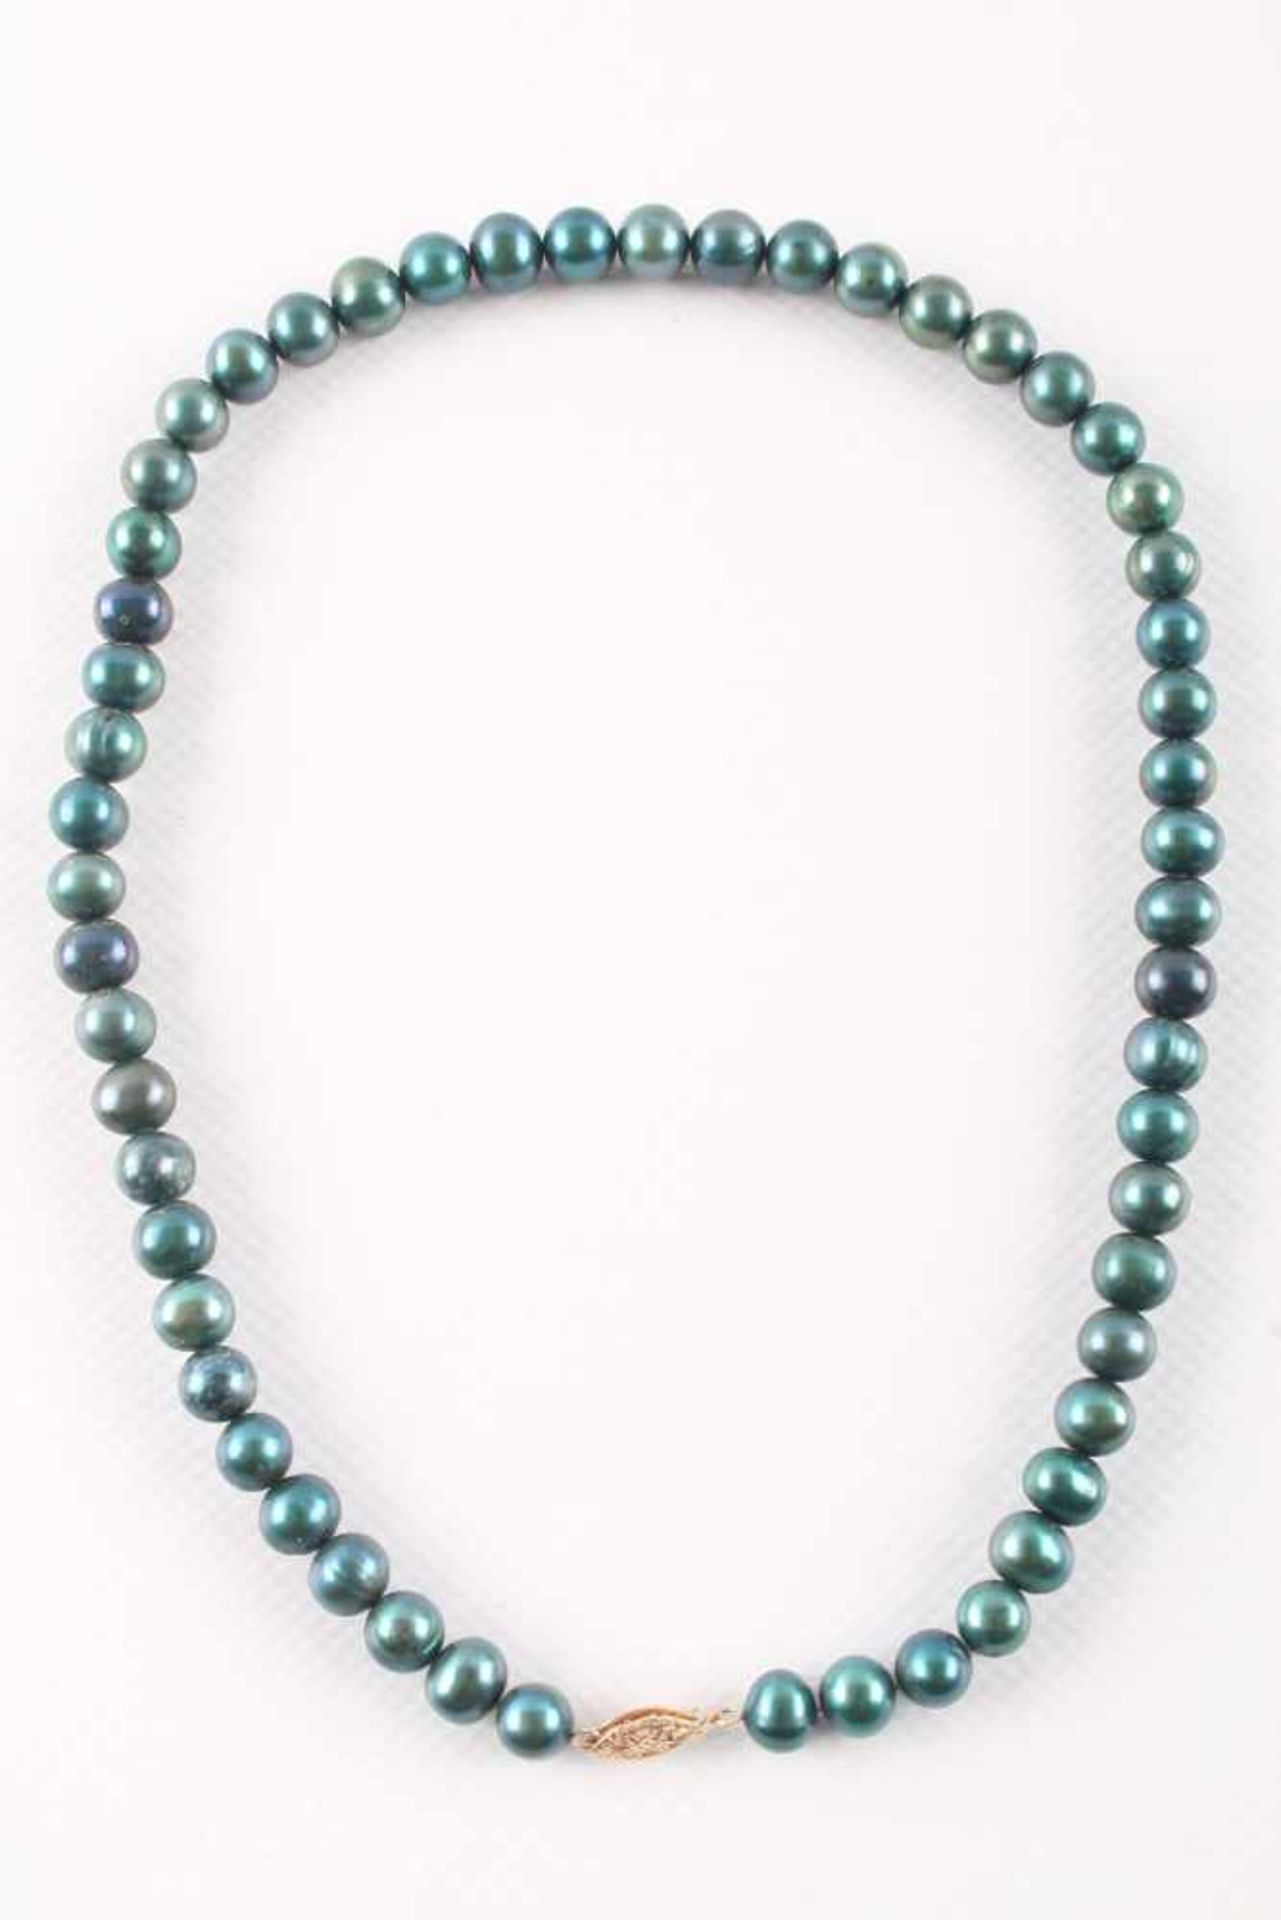 Tahiti-Perlenkette mit 585 Goldverschluß, tahitian pearl necklace gold ball lock, - Bild 3 aus 4